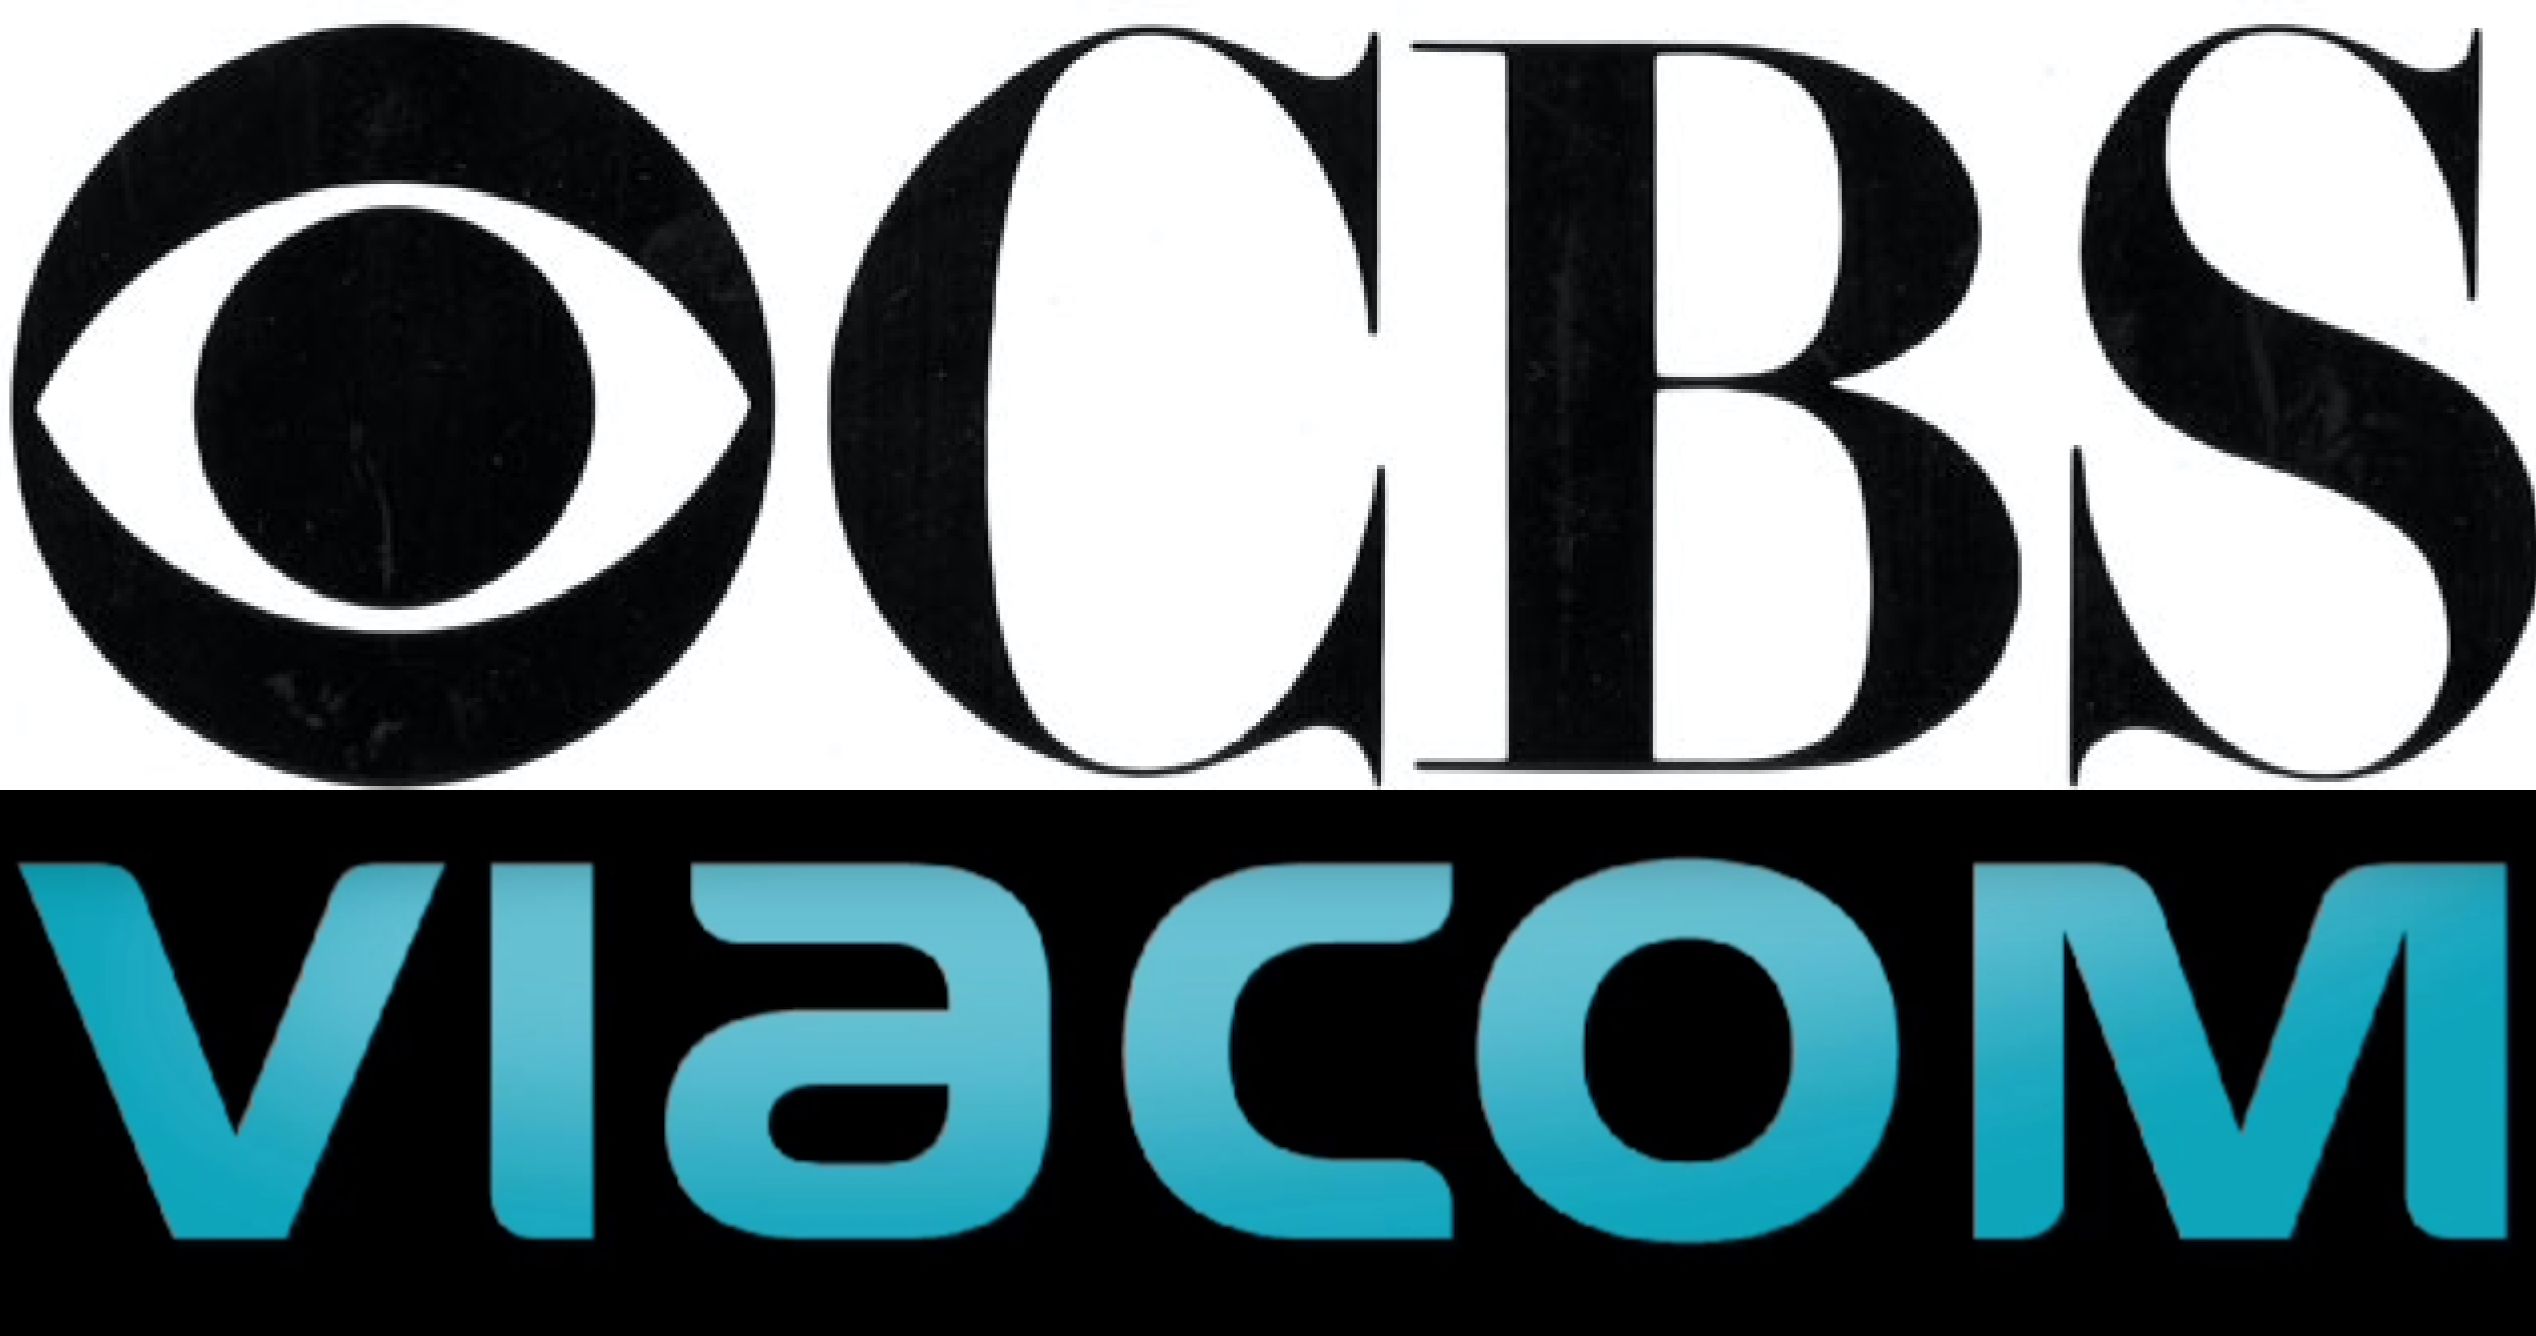 CBS &amp; Viacom Agree to Merger in Latest Major Media Shake-Up